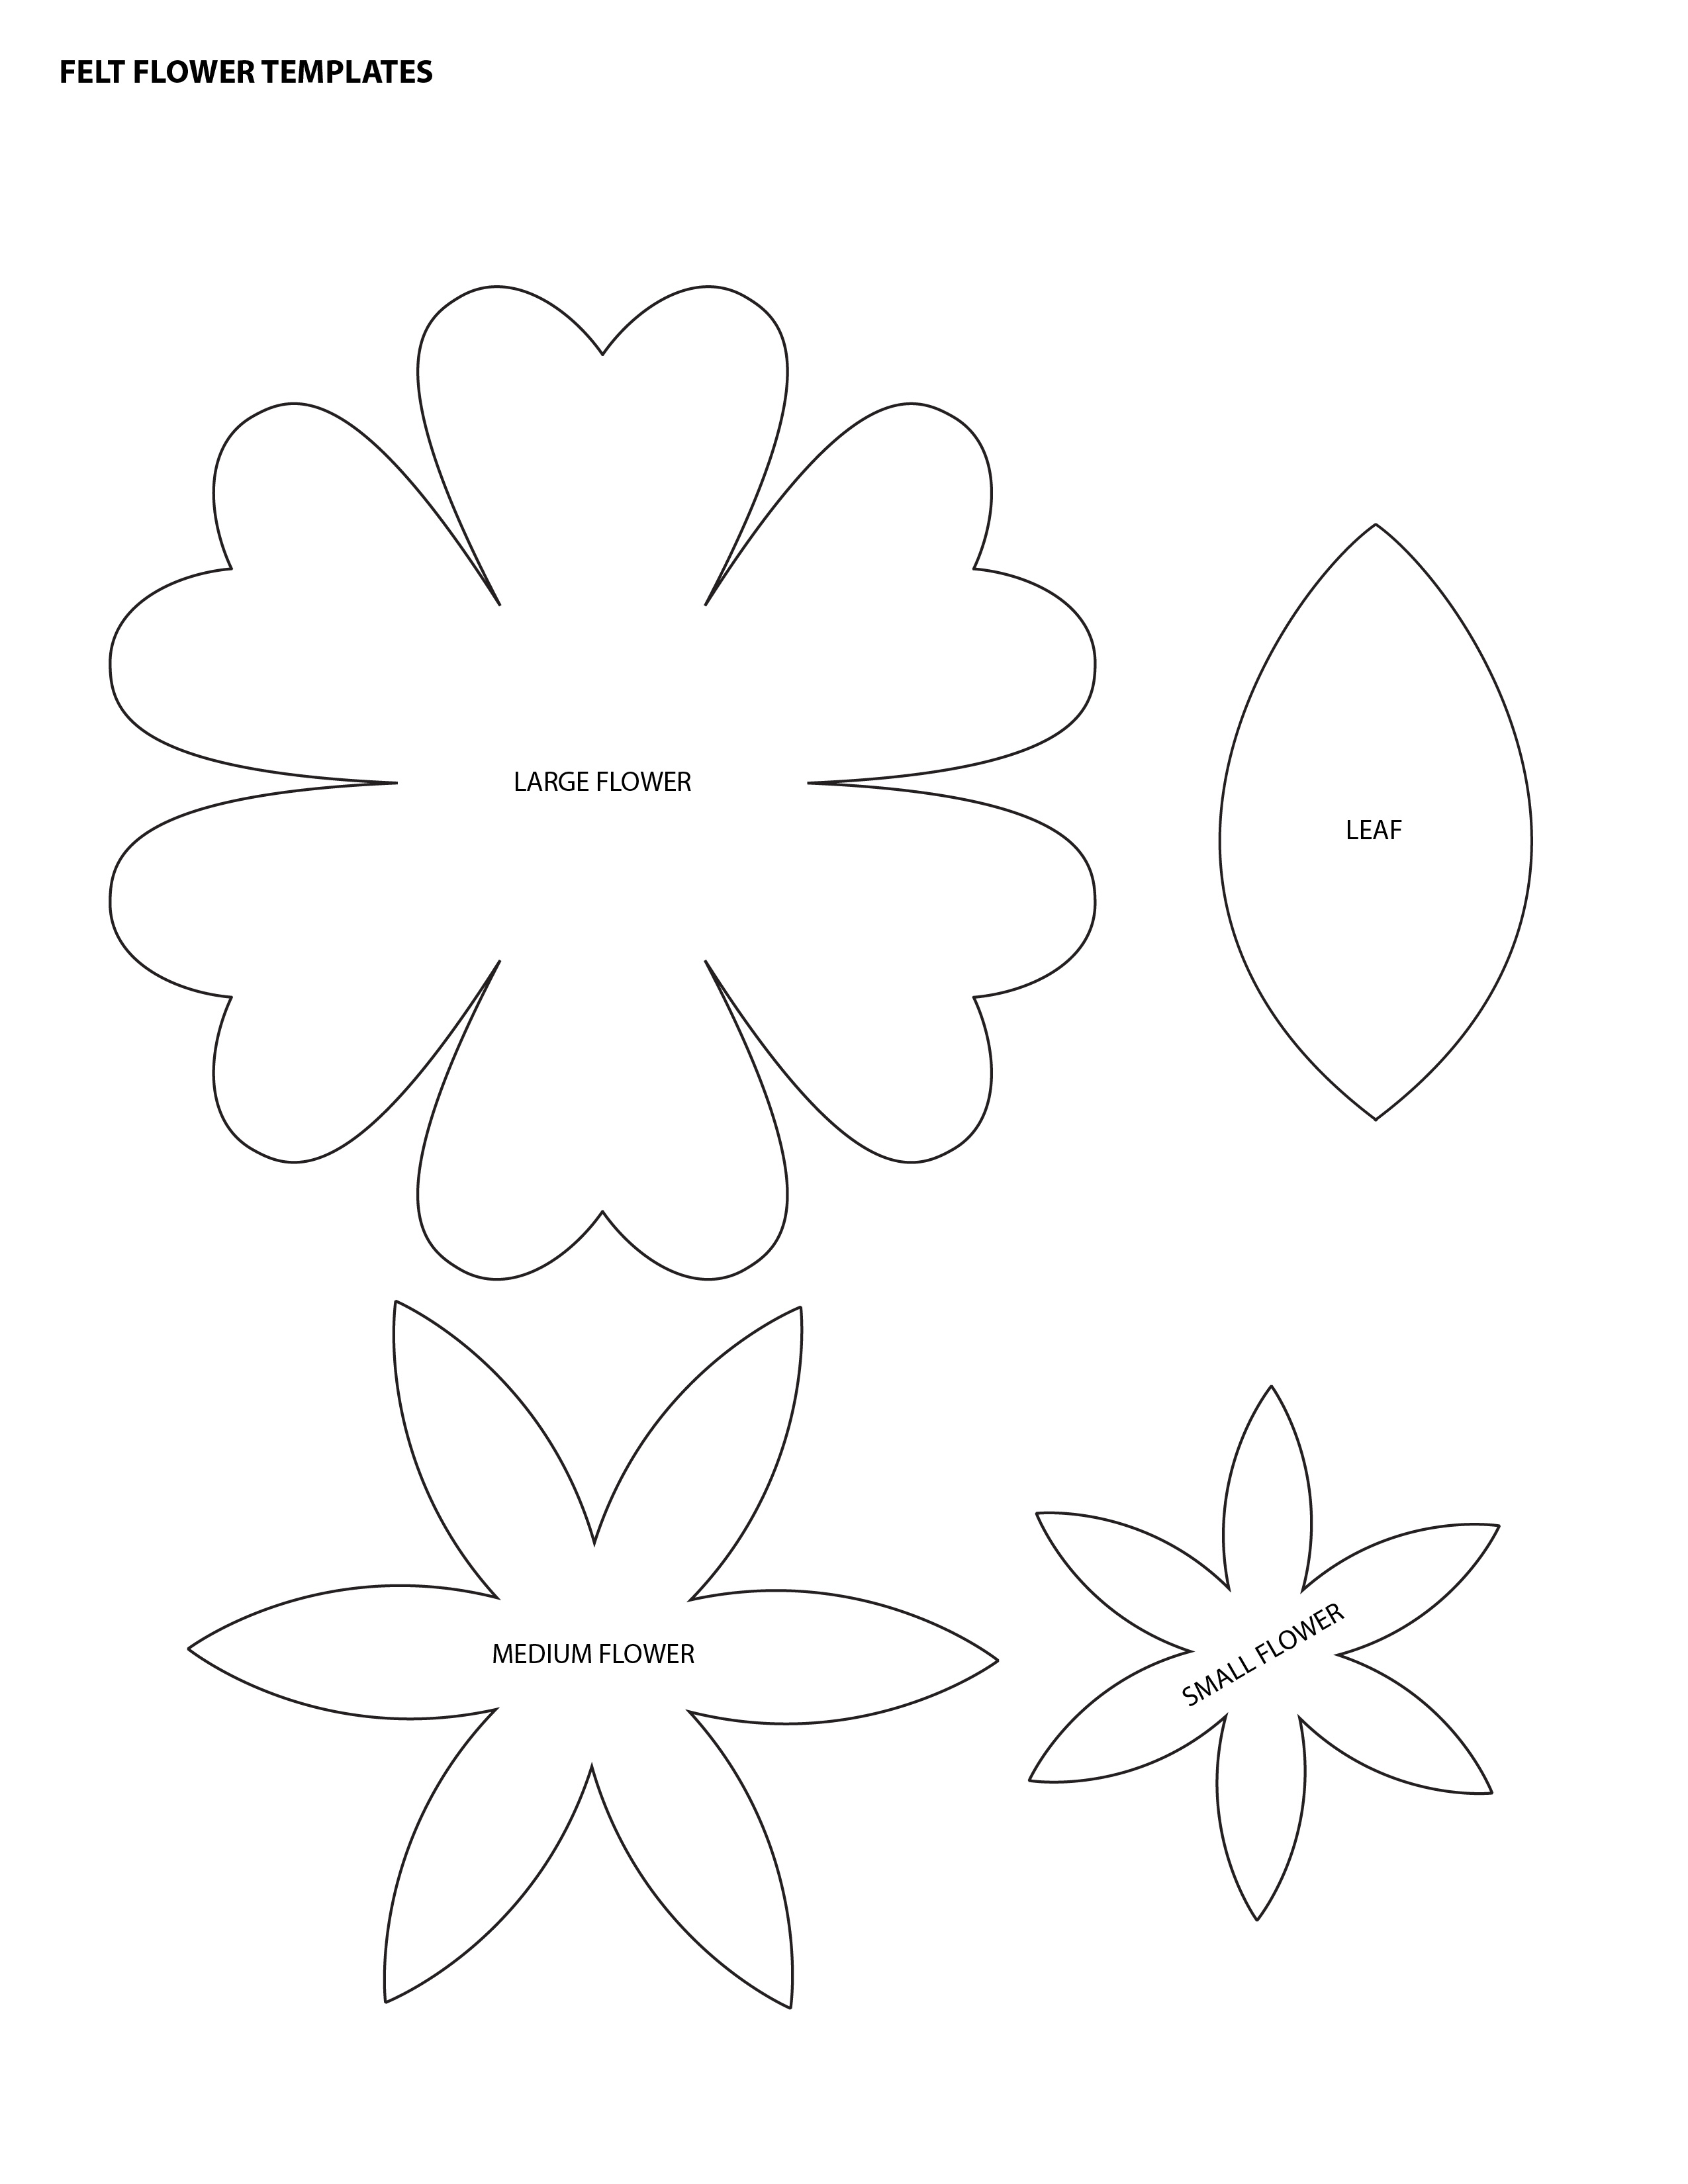 7-best-images-of-felt-flower-template-printable-free-6-sample-flower